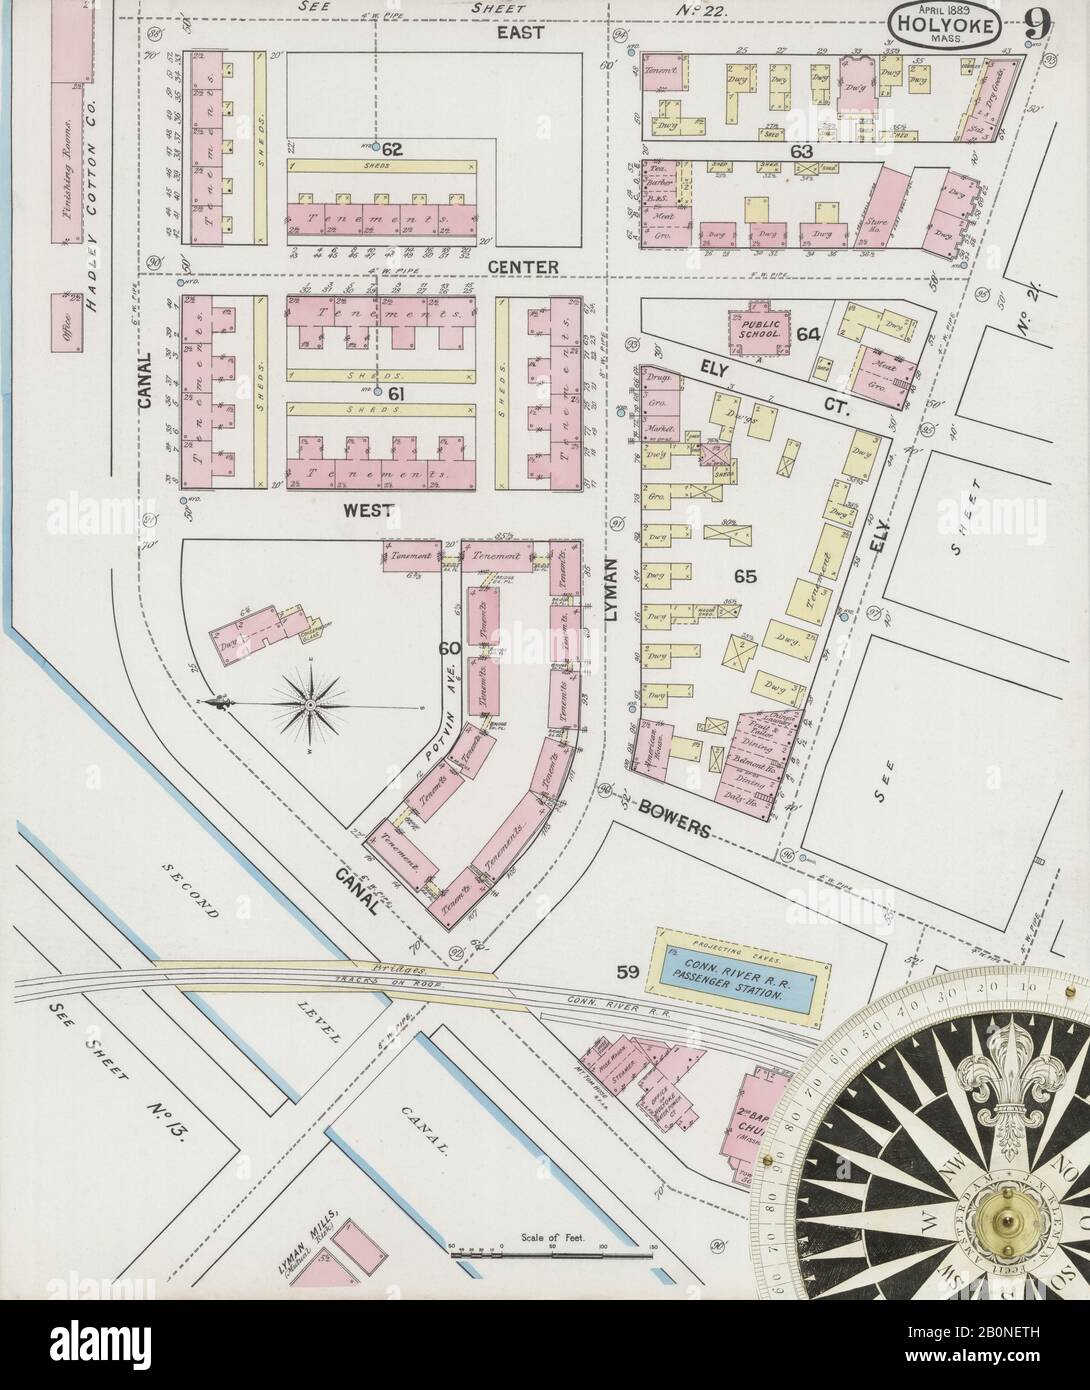 Bild 9 von Sanborn Fire Insurance Map aus Holyoke, Hampden County, Massachusetts. Apr. 30 Blatt(e), Amerika, Straßenkarte mit einem Kompass Aus Dem 19. Jahrhundert Stockfoto